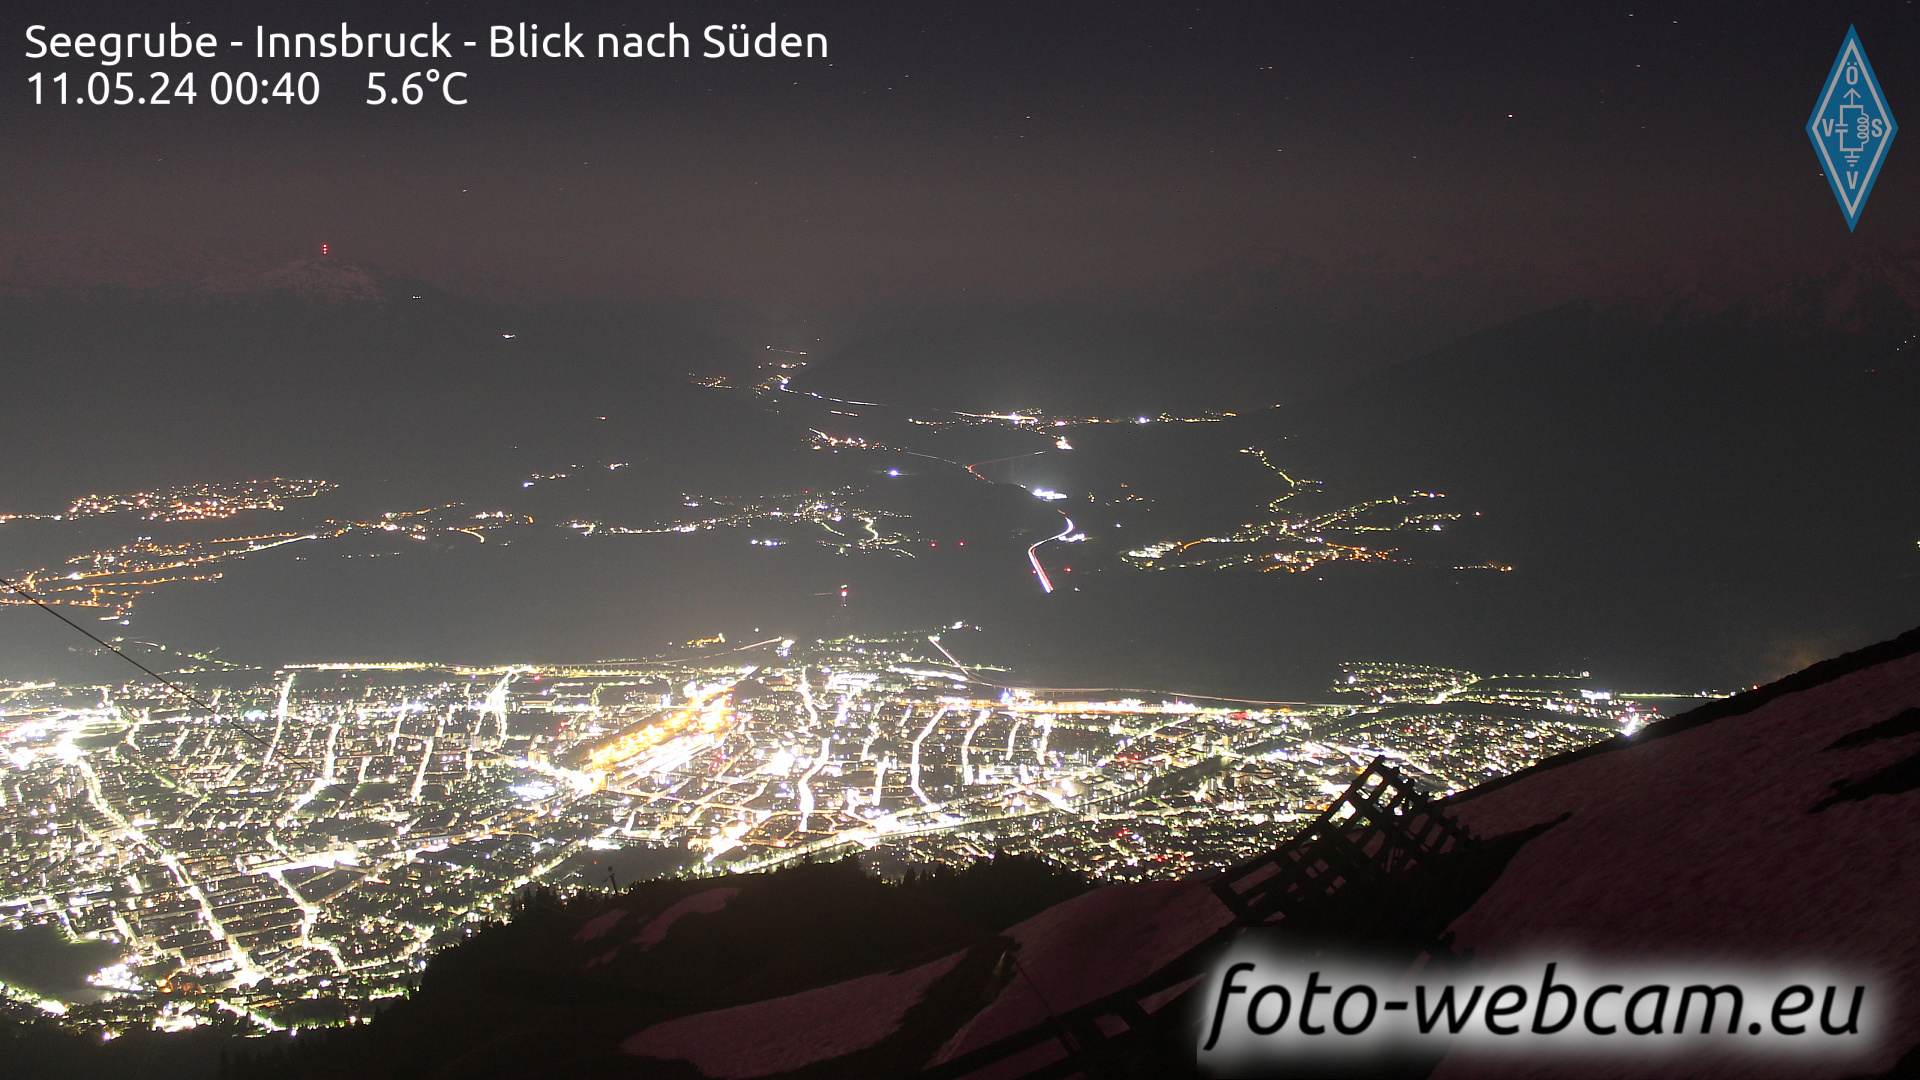 Innsbruck Man. 00:48